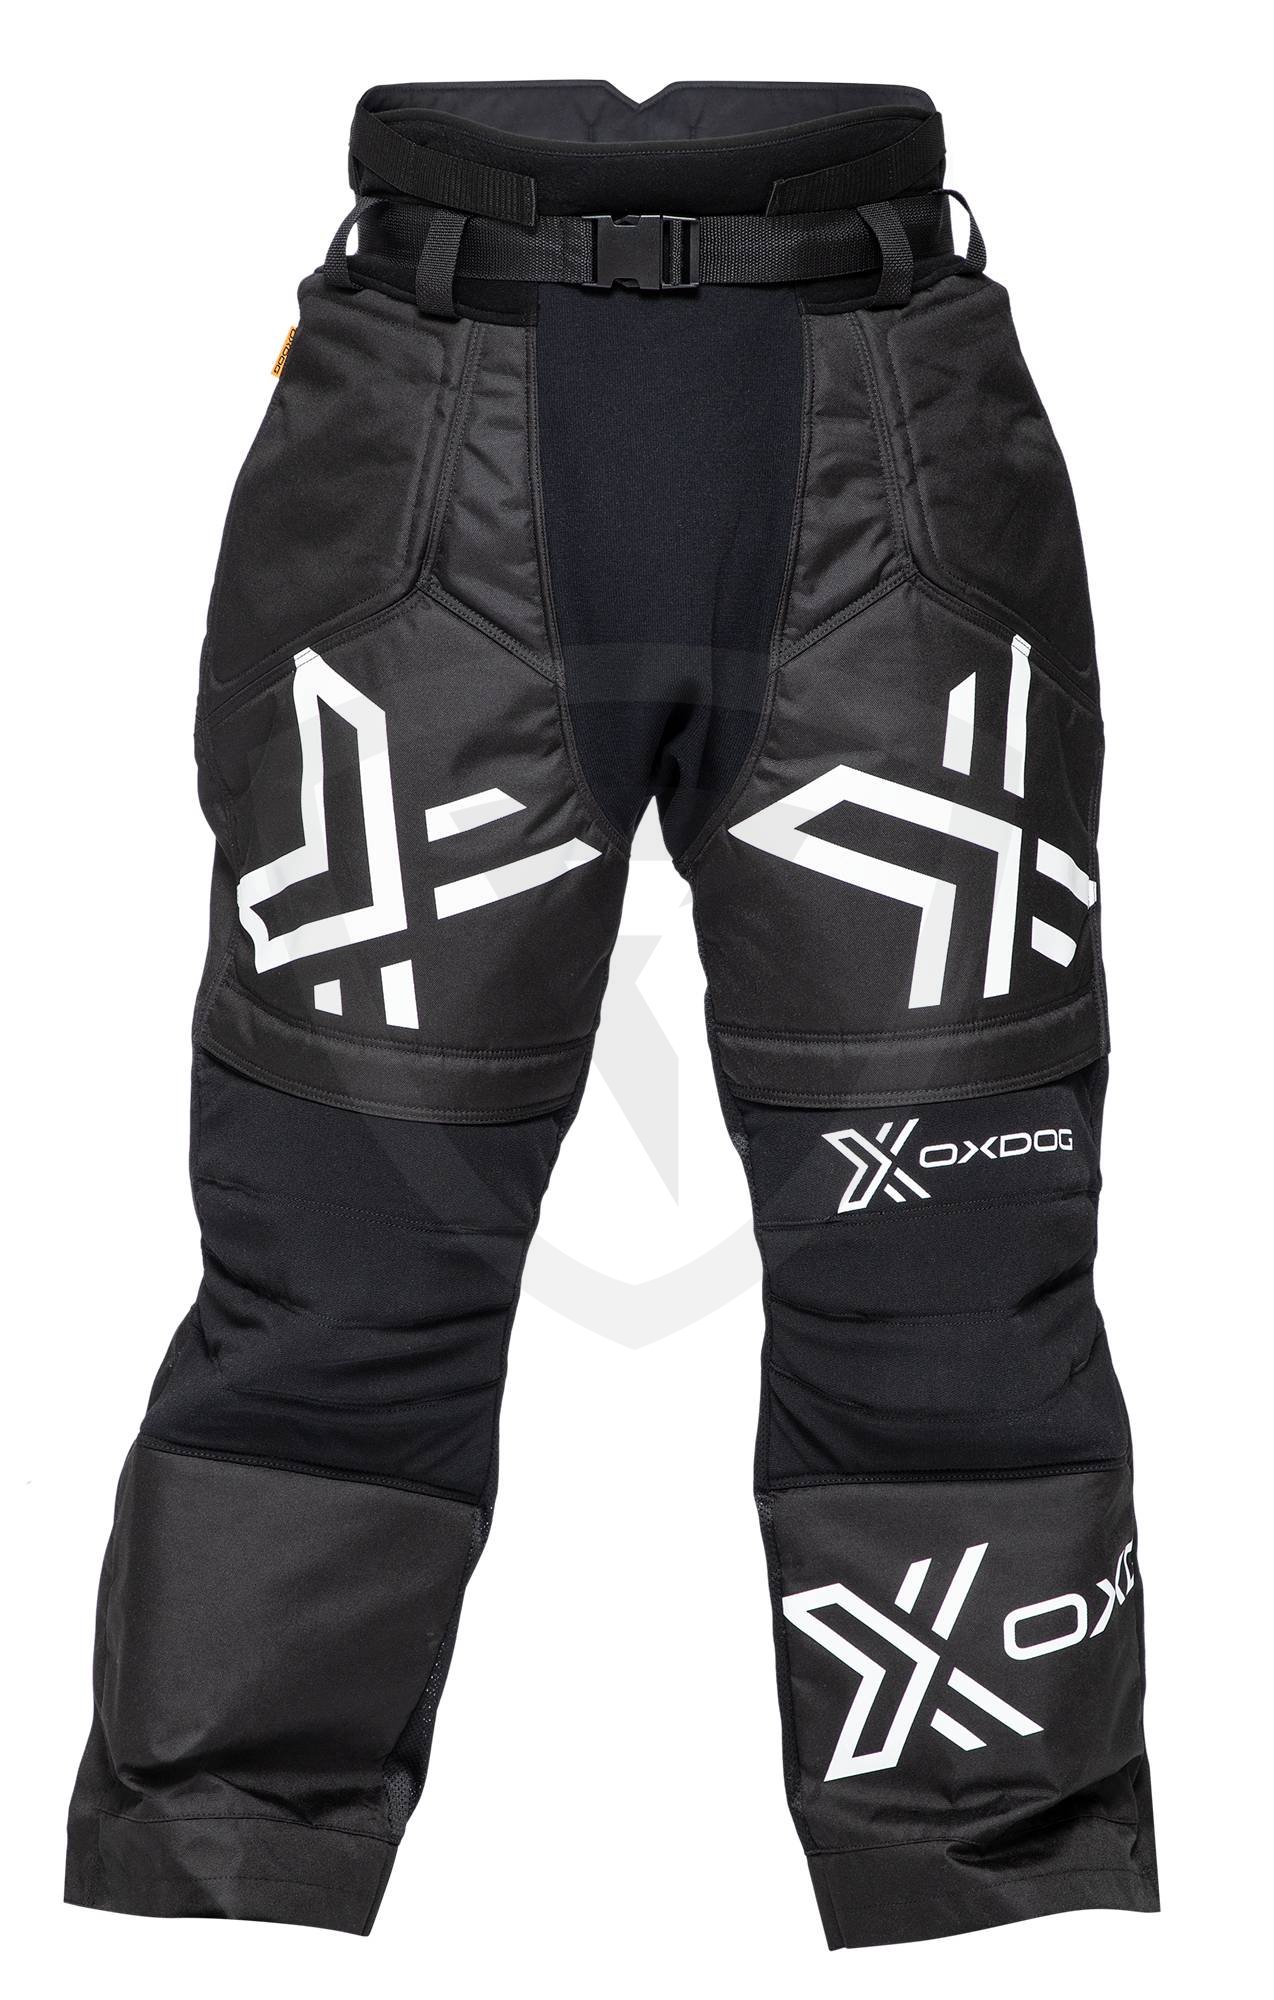 Oxdog Xguard Goalie Pants Black-White XL